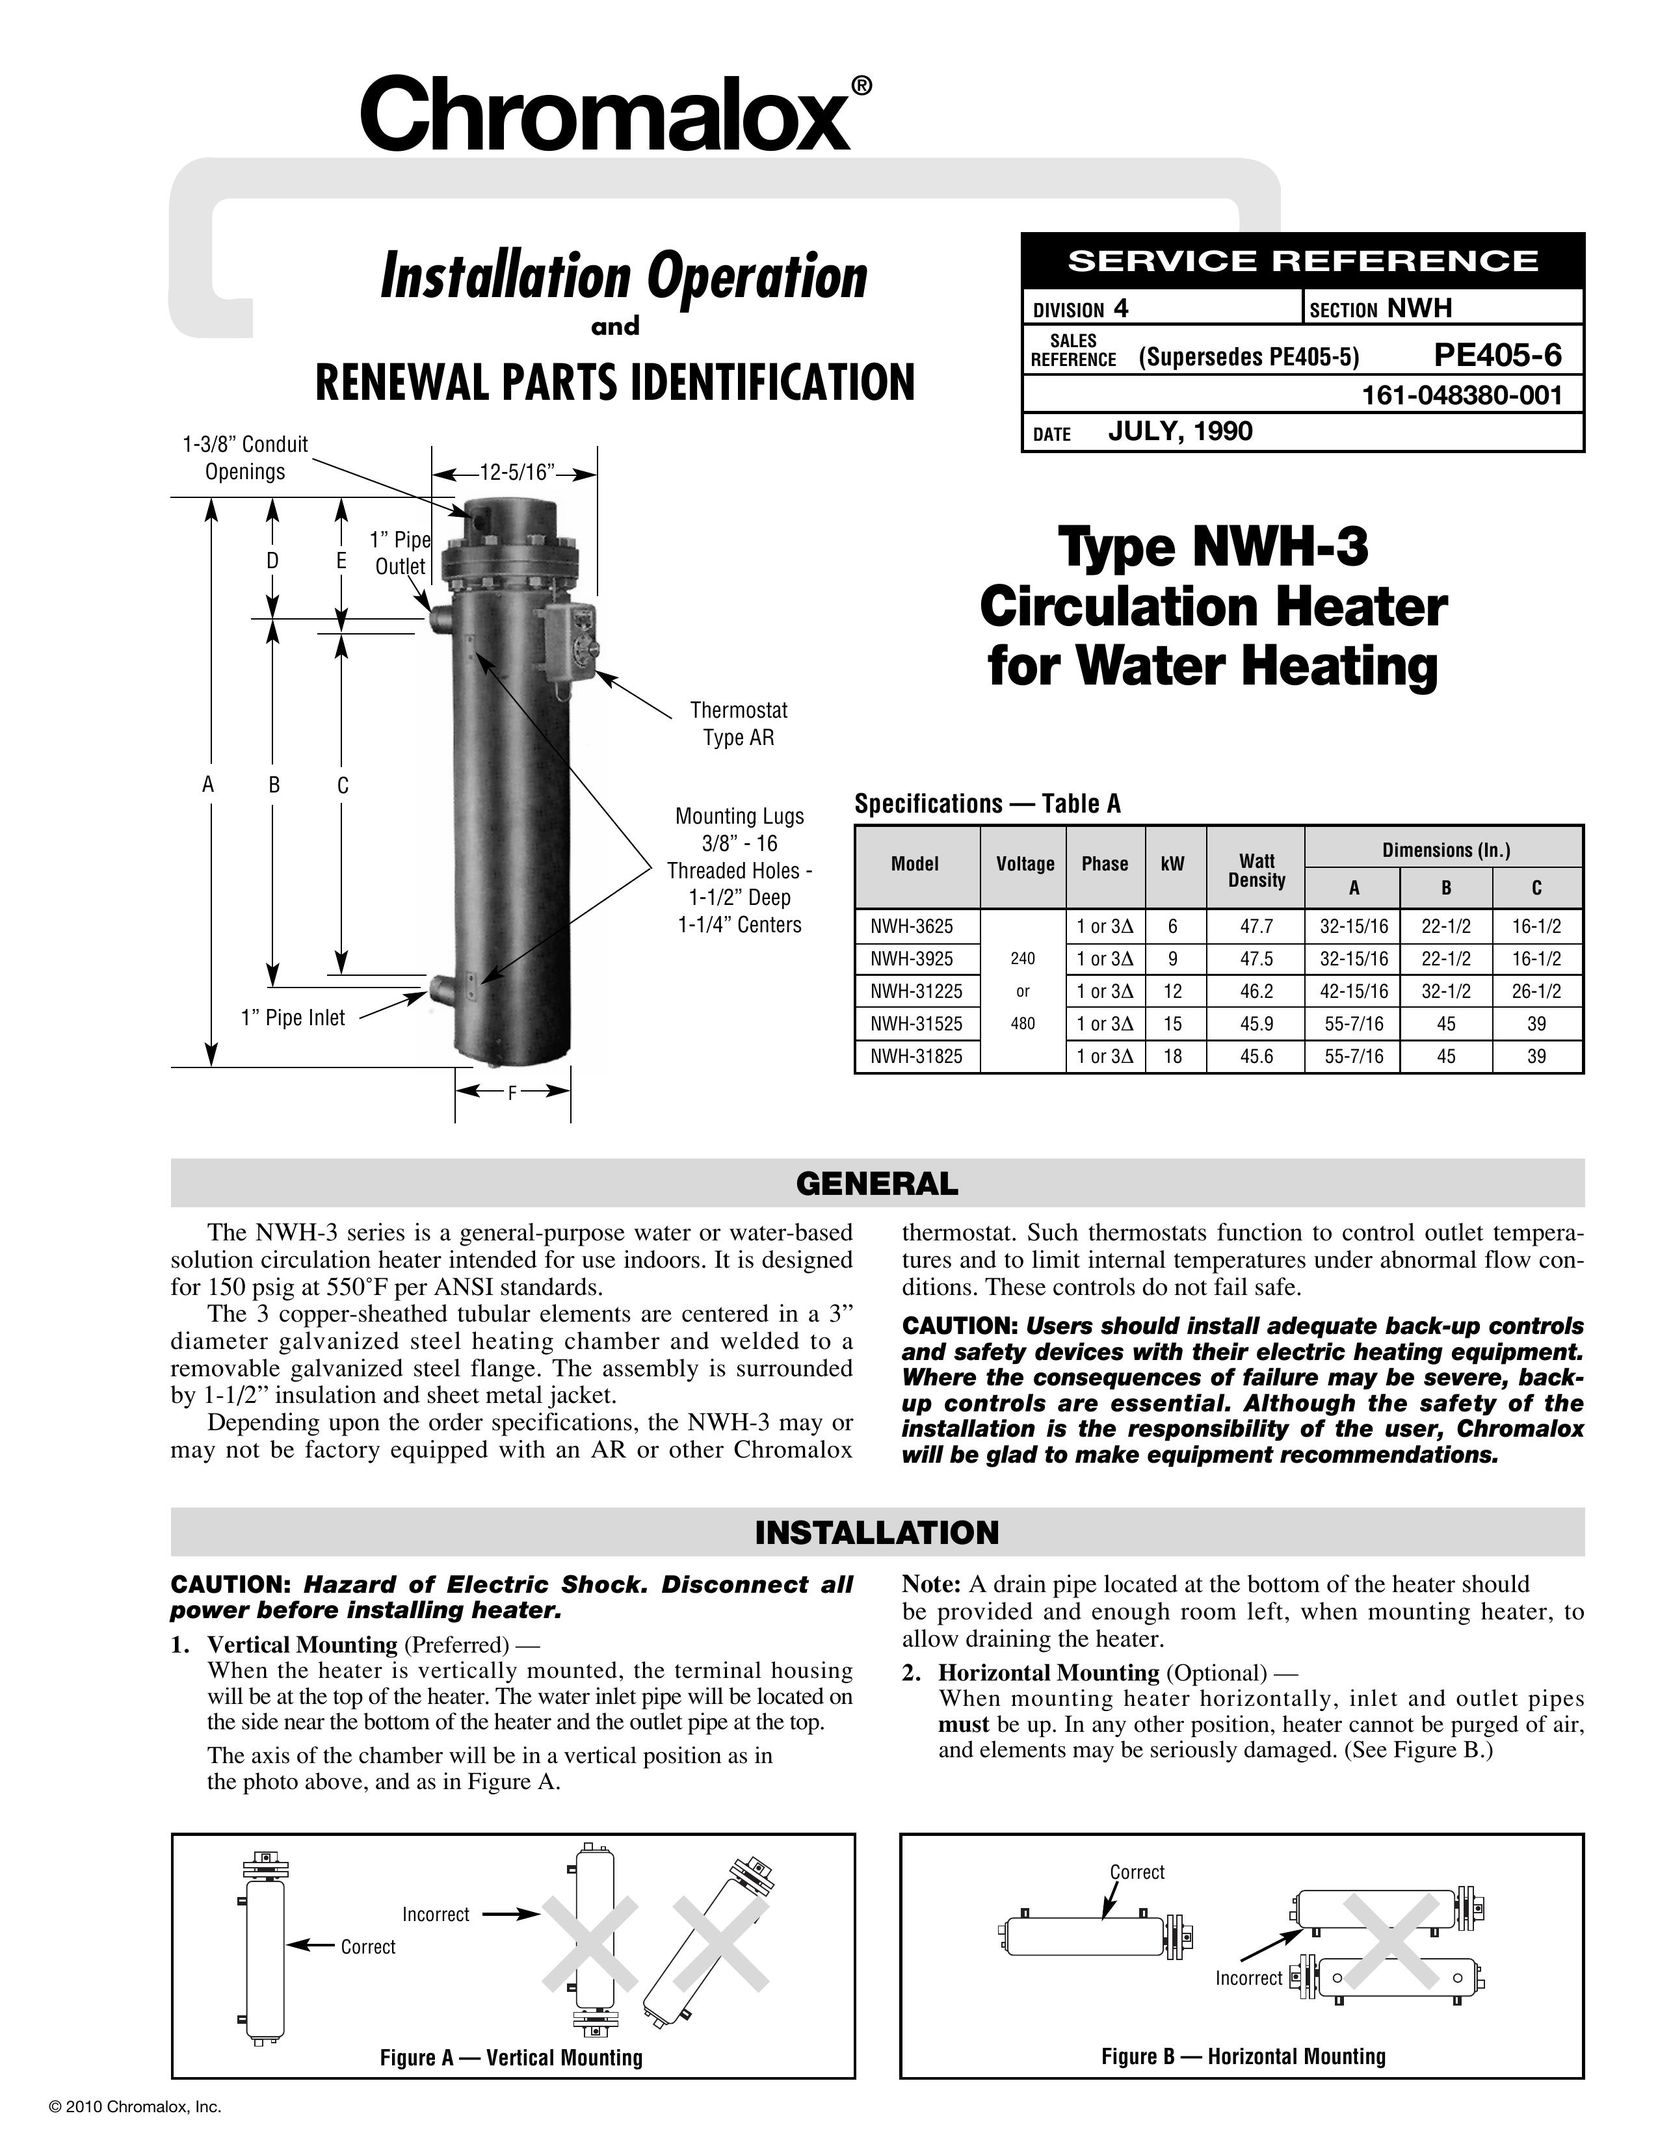 Chromalox NWH-31525 Water Heater User Manual